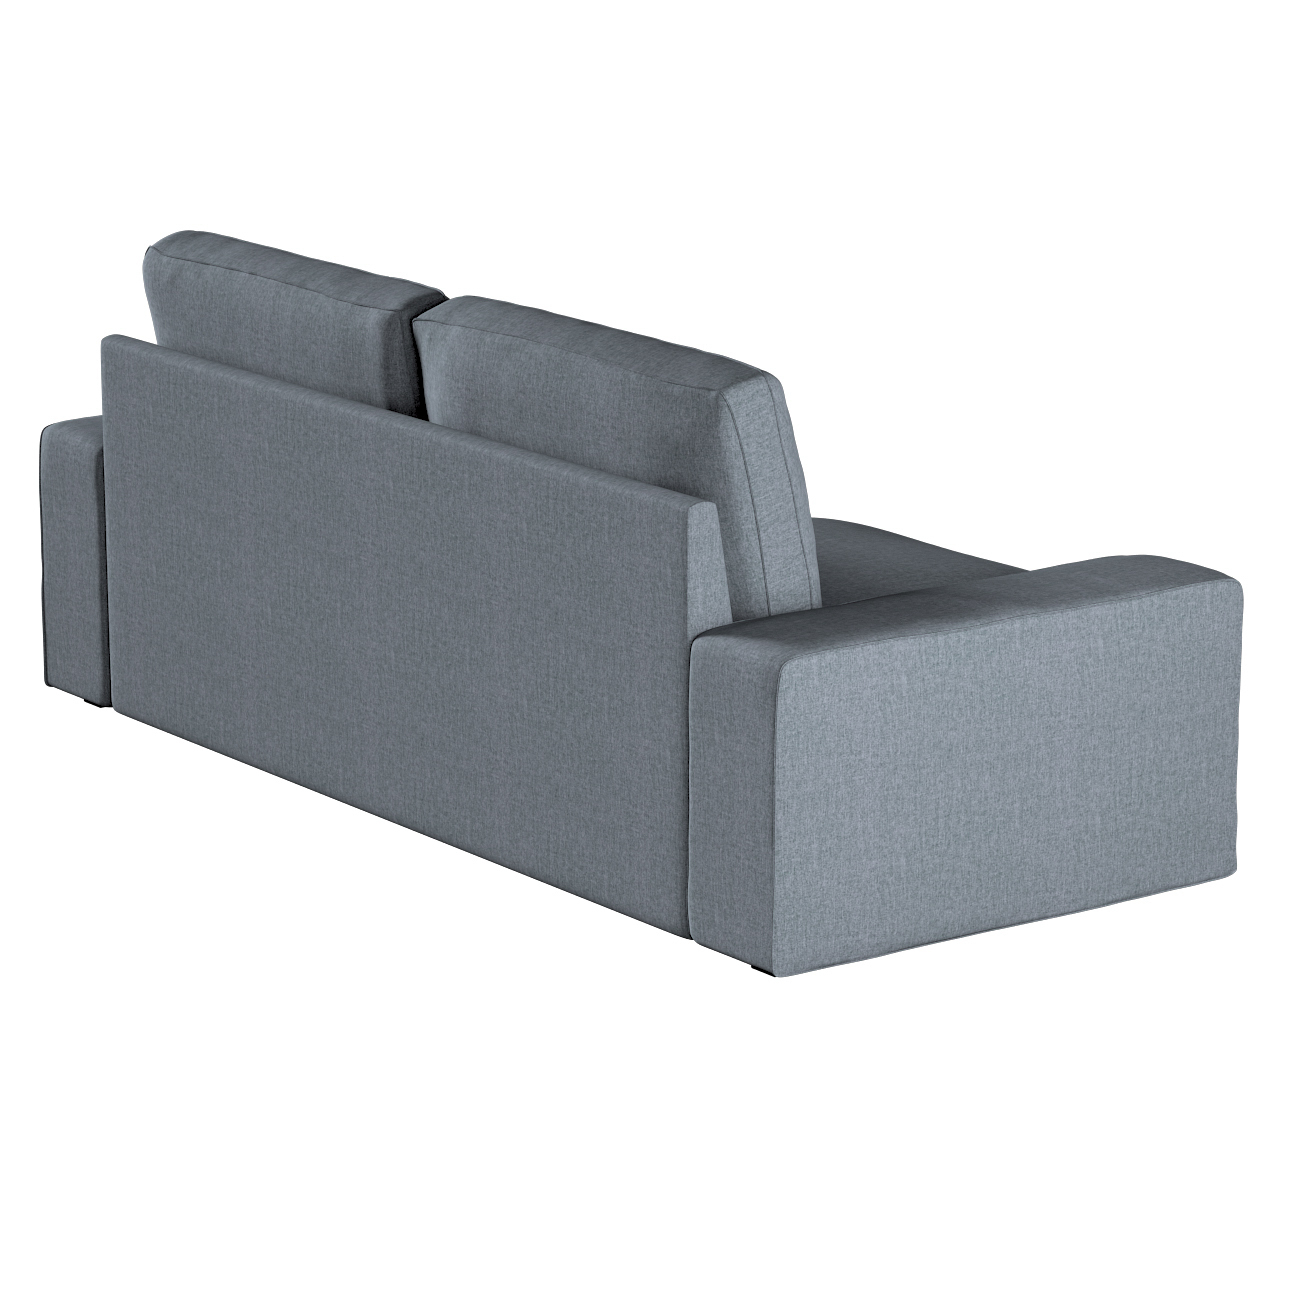 Bezug für Kivik 3-Sitzer Sofa, grau, Bezug für Sofa Kivik 3-Sitzer, City (7 günstig online kaufen